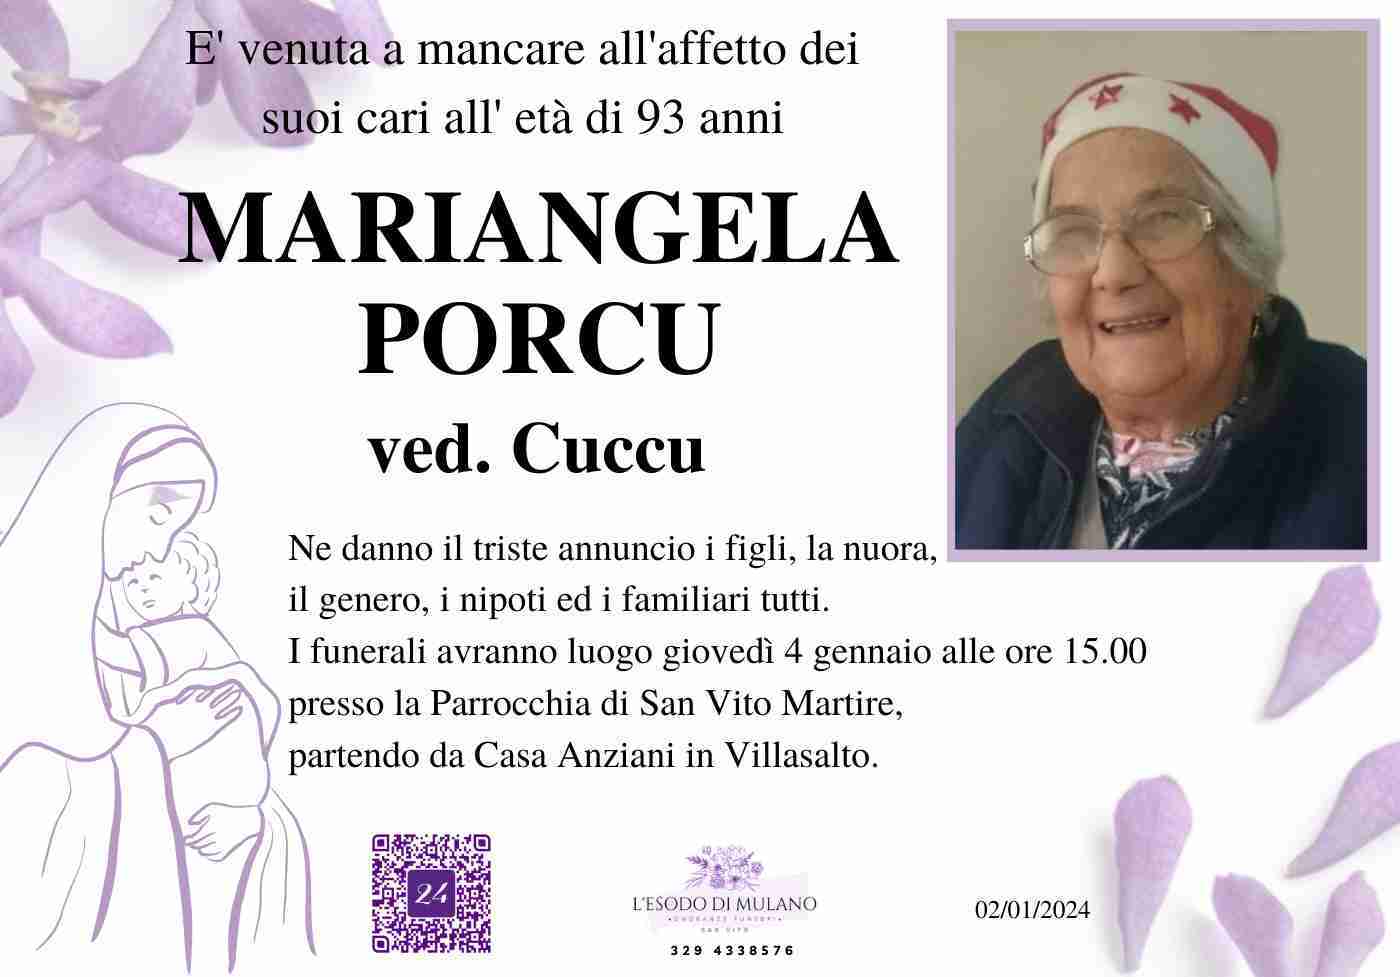 Mariangela Porcu